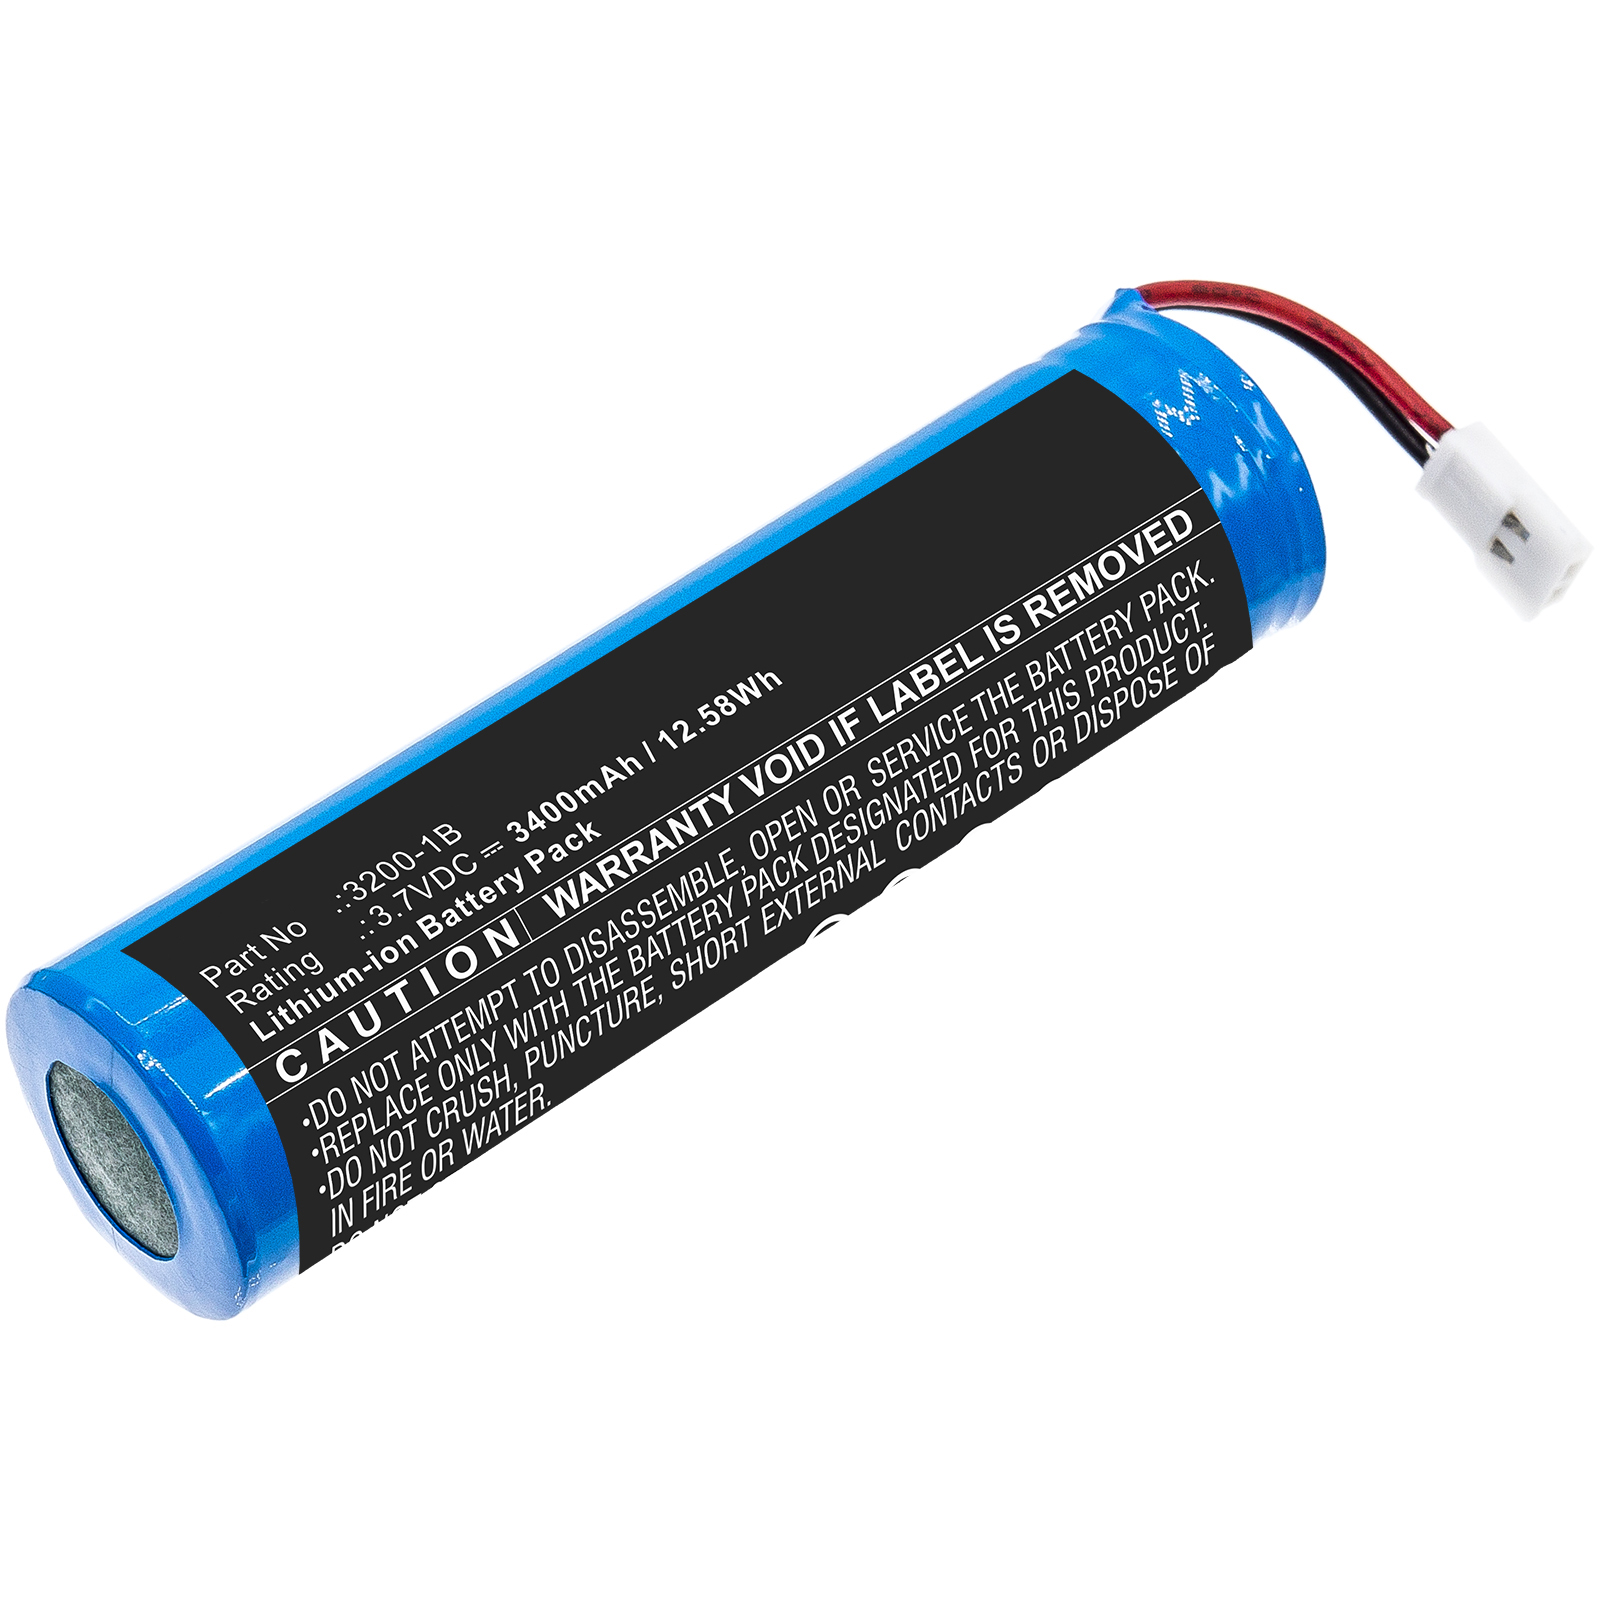 Batteries for EschenbachElectronic Magnifier